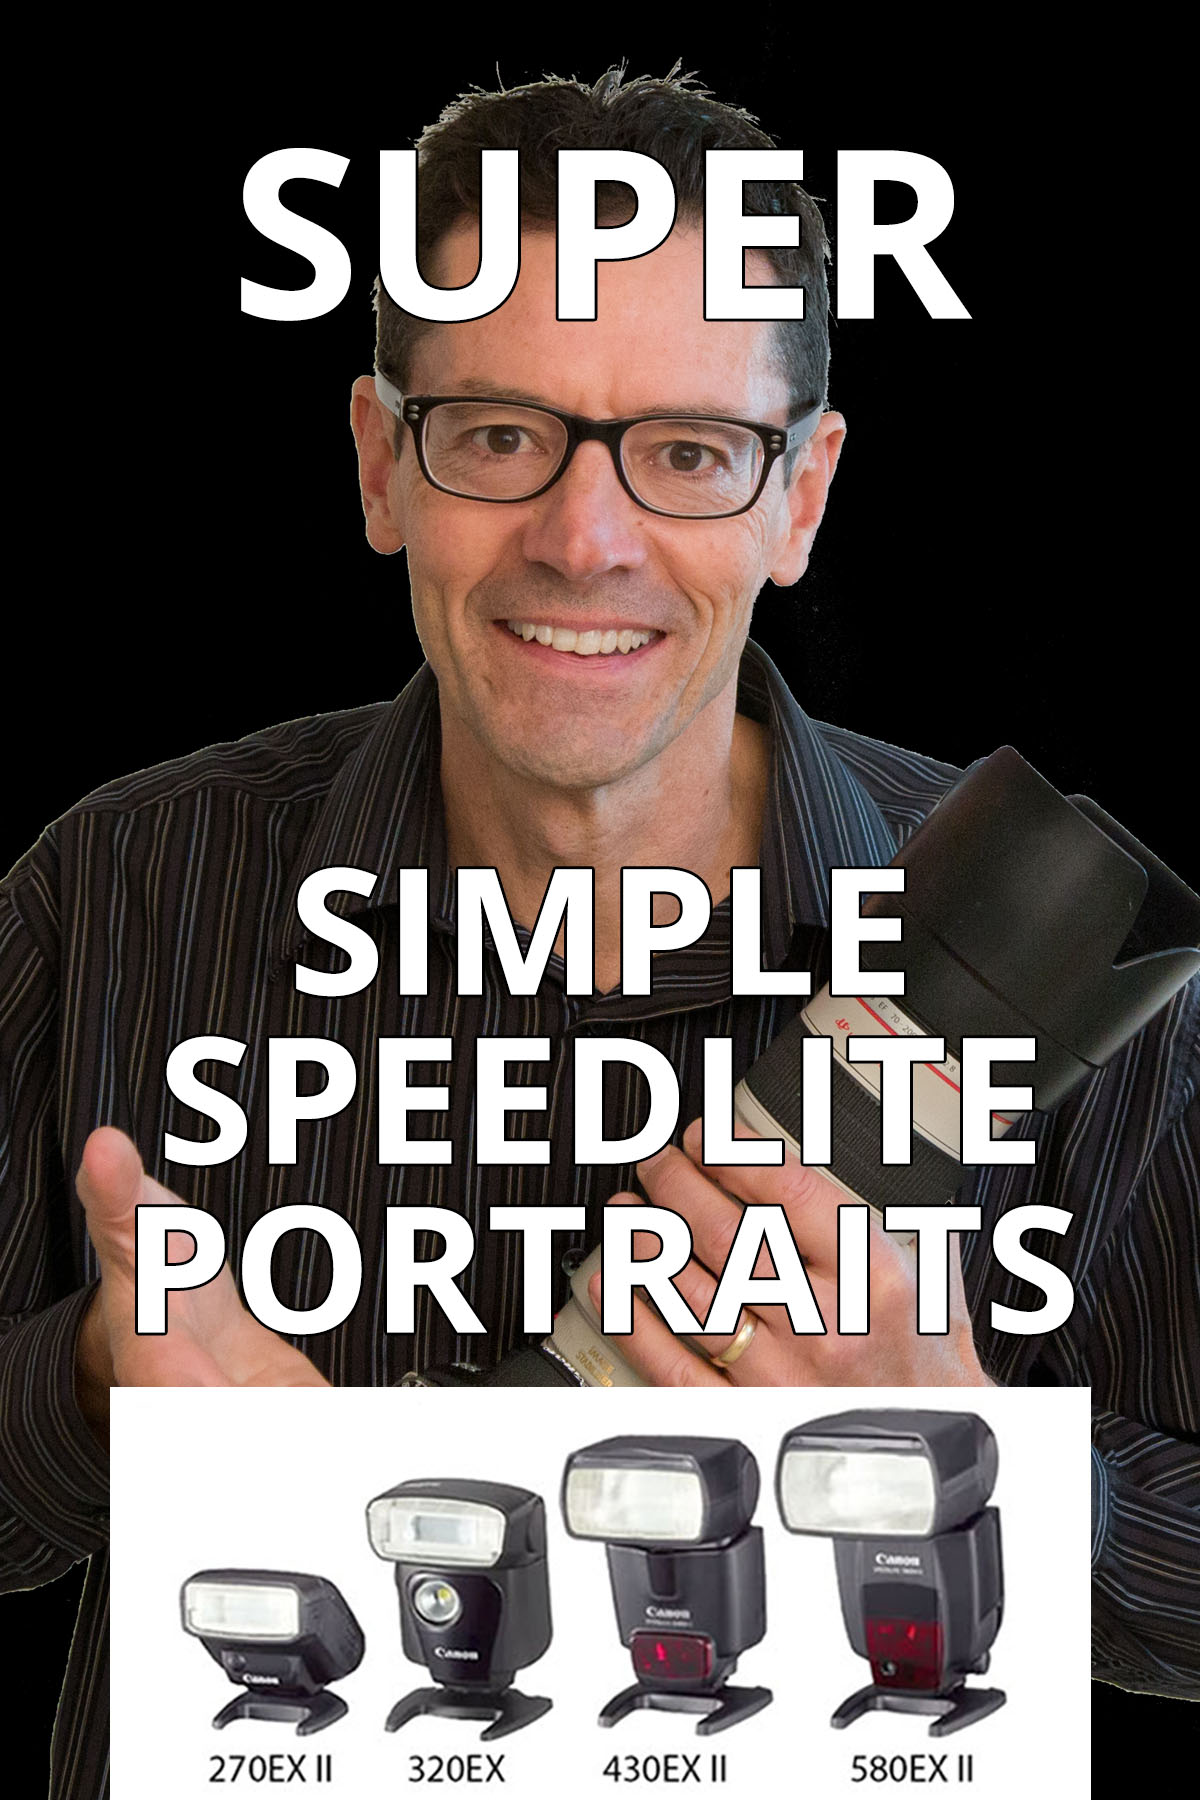 Speedlite Portraits on Pinterest